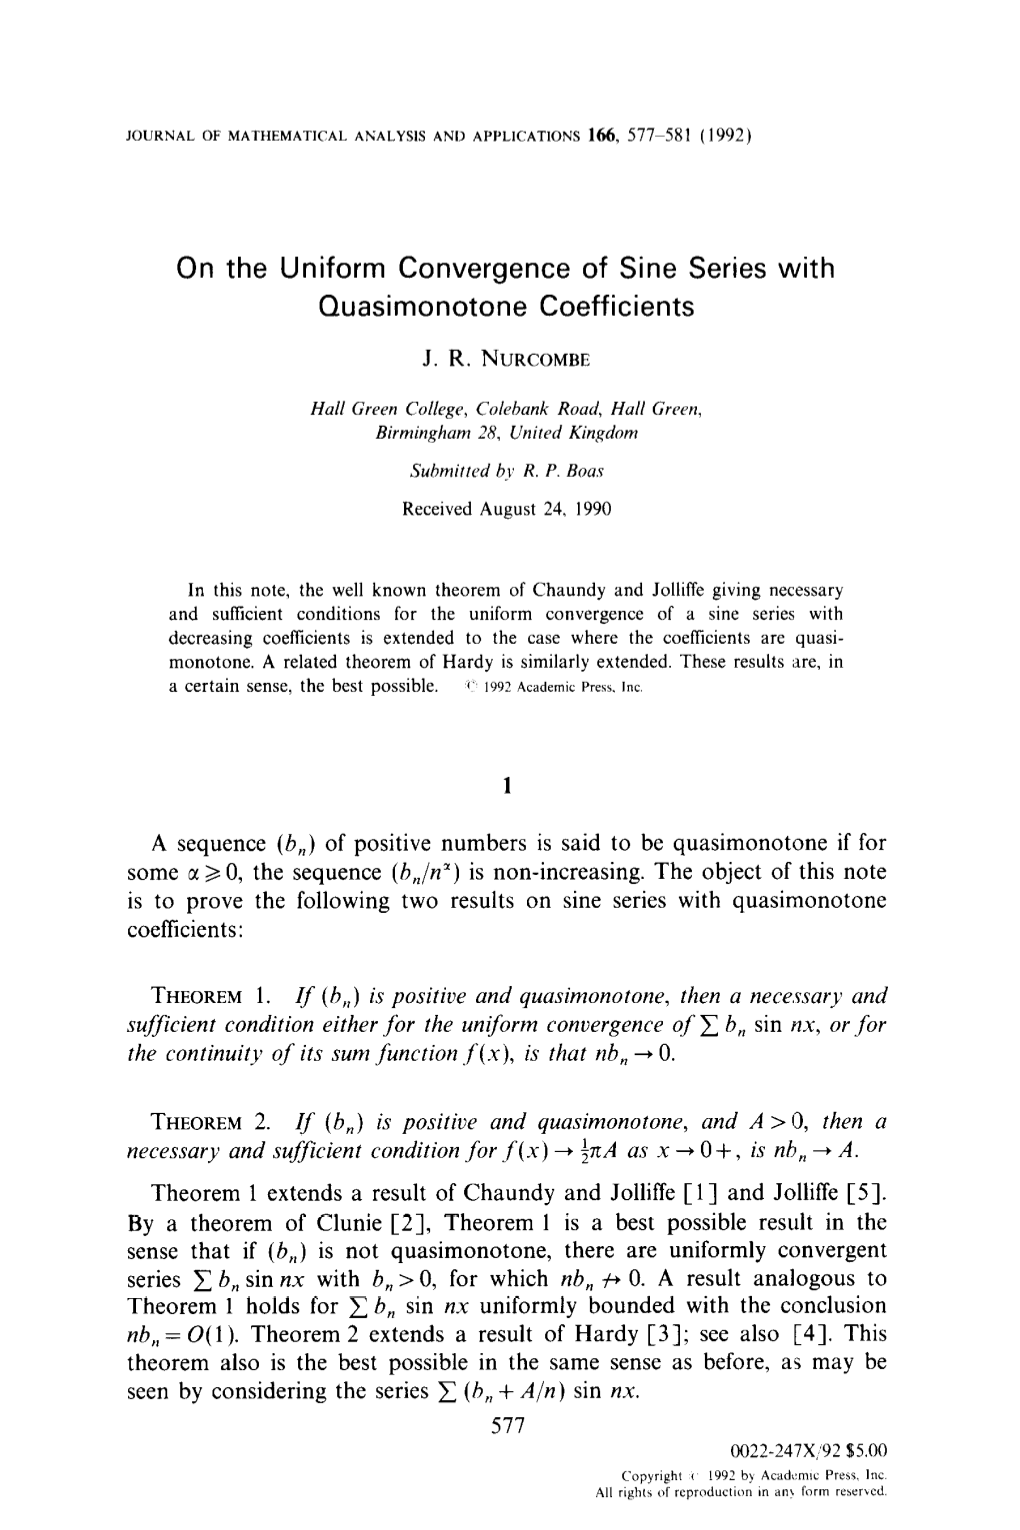 On the Uniform Convergence of Sine Series with Quasimonotone Coefficients